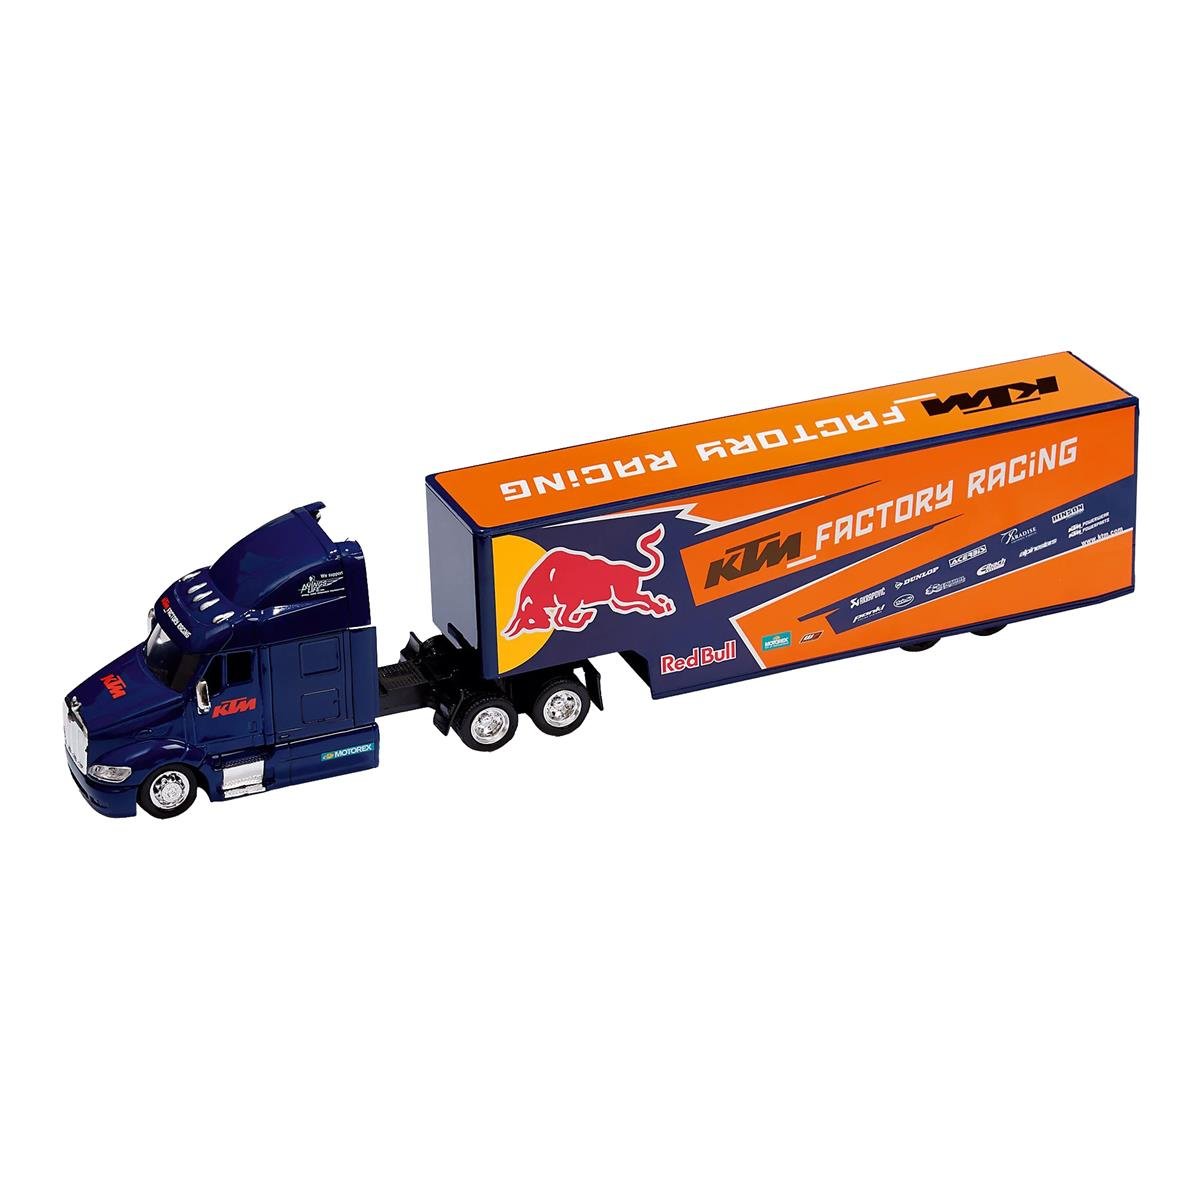 Red Bull Truck Model  KTM Factory Racing Team, 1:43